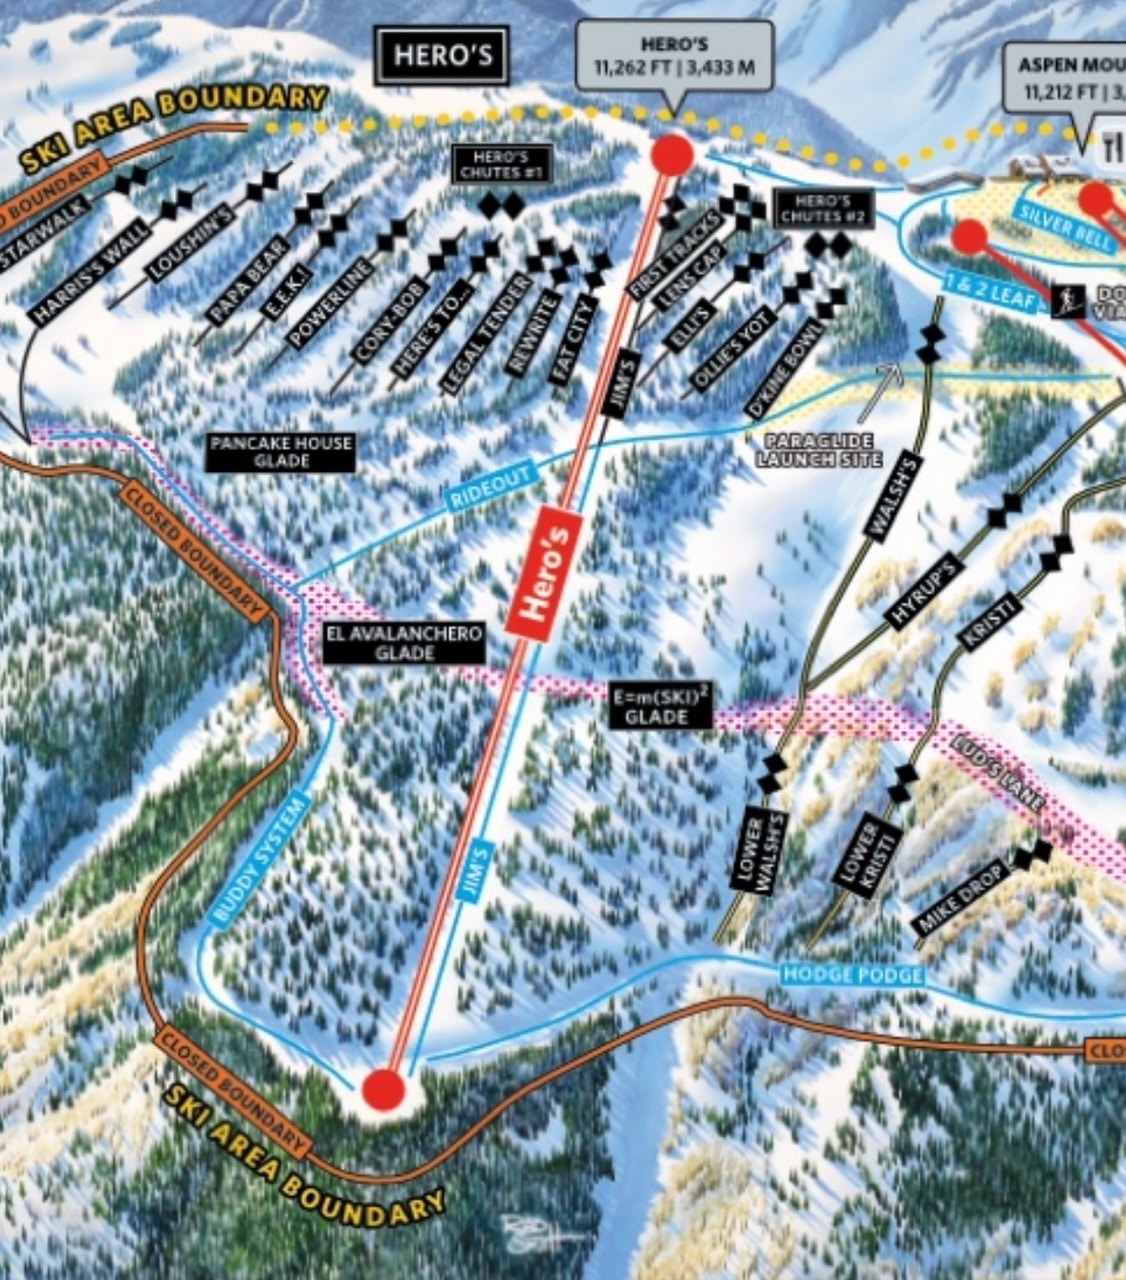 New Hero's chairlift and ski runs on aspen mountain